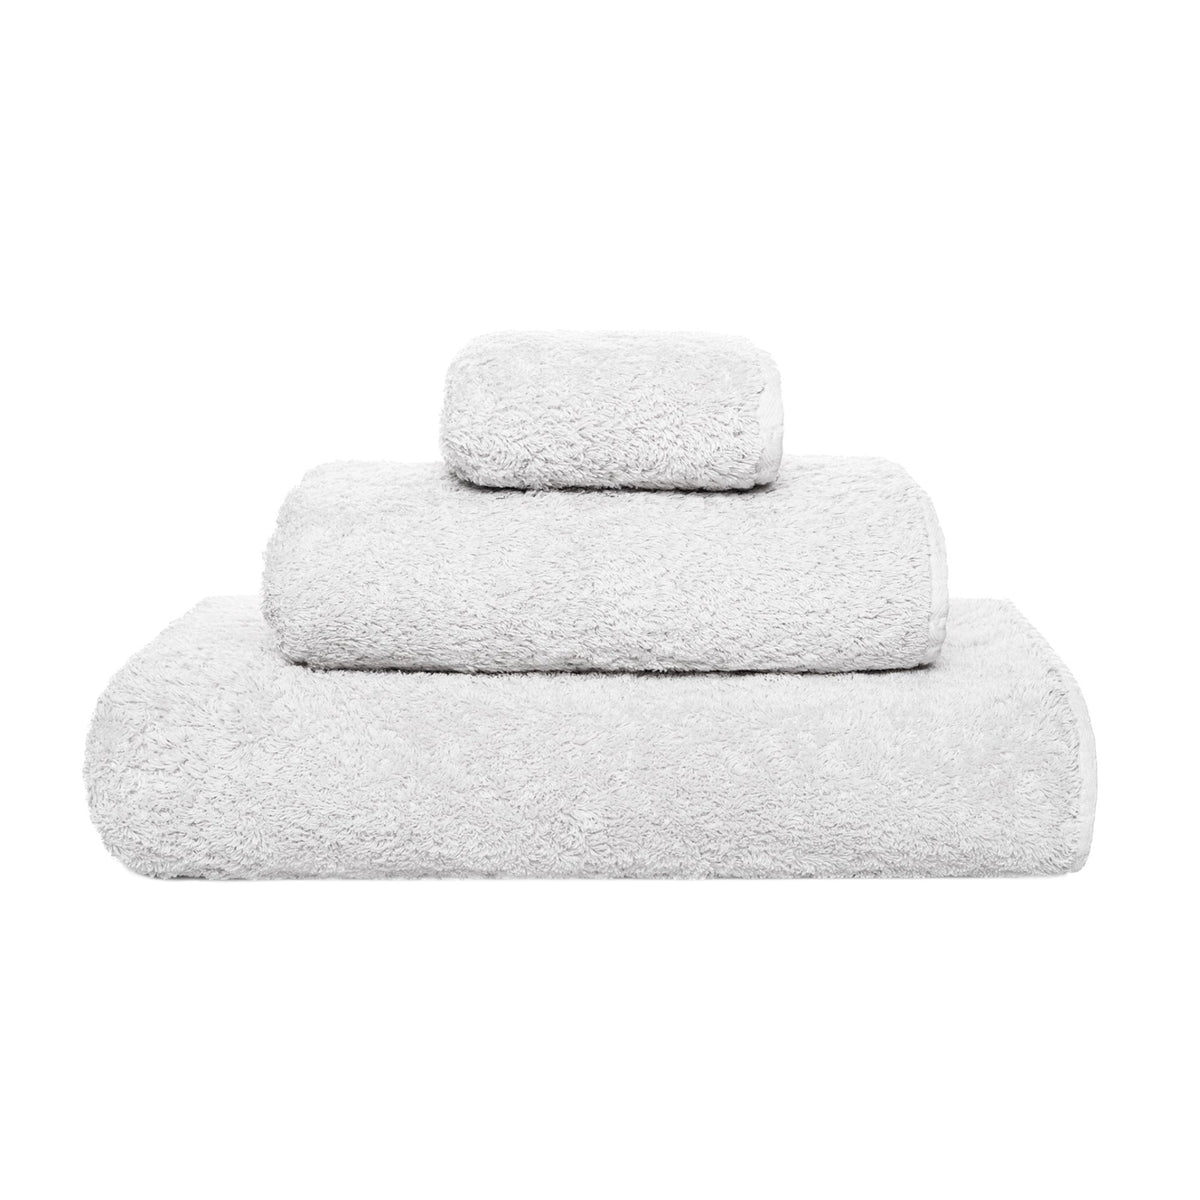 Clear Image of Graccioza Grand Egoist Bath Towels Cloud